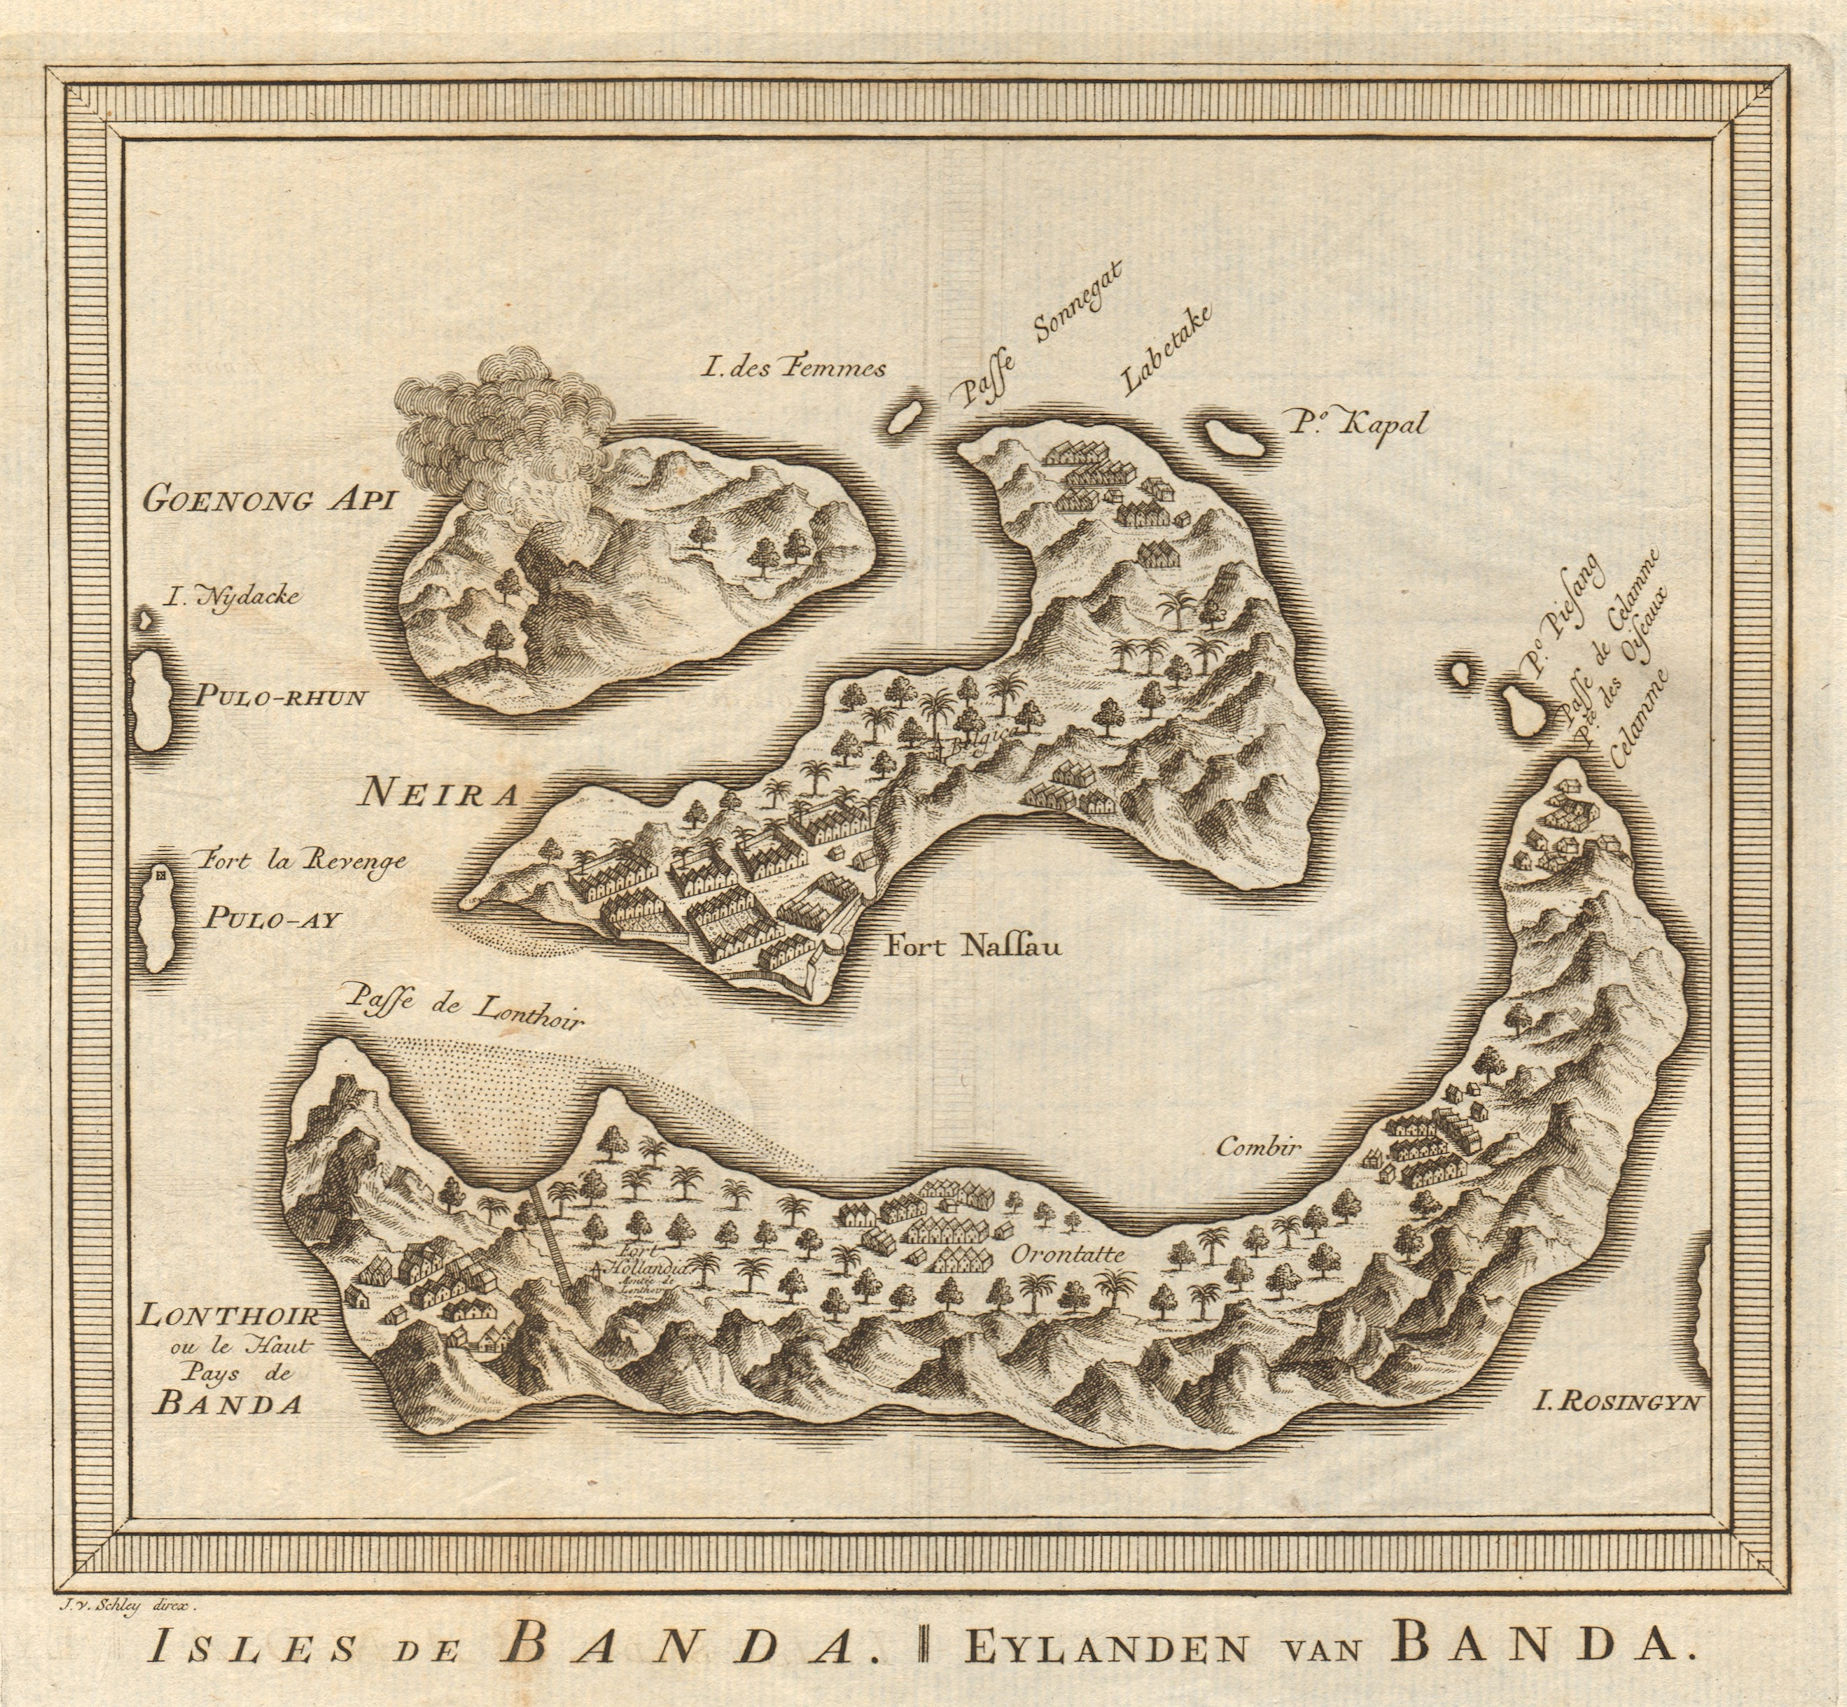 'Isles de Banda' islands Molucca Maluku Naira Fort Nassau BELLIN/SCHLEY 1755 map